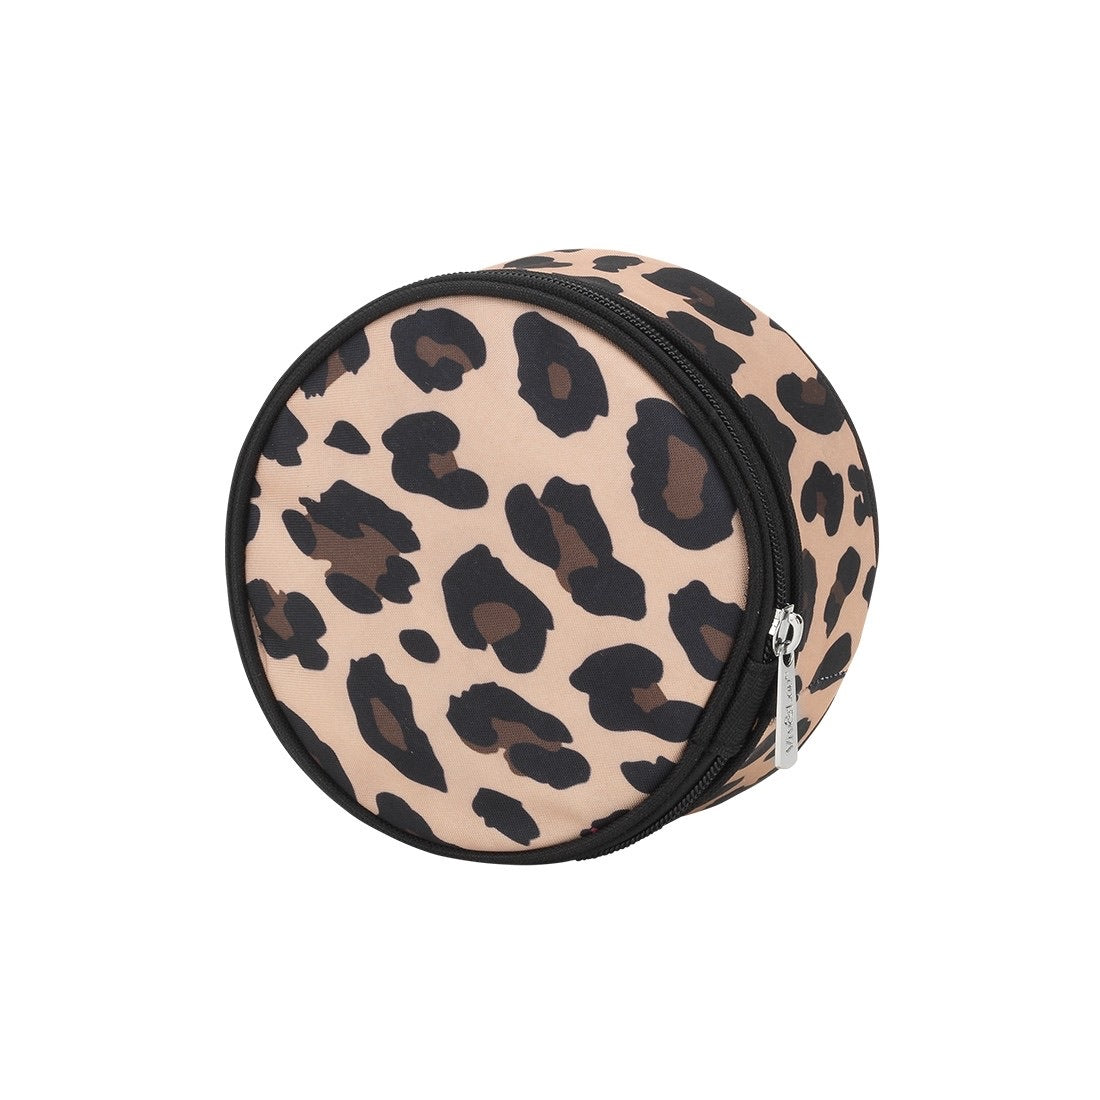 Wild Side Leopard Round Jewelry Case